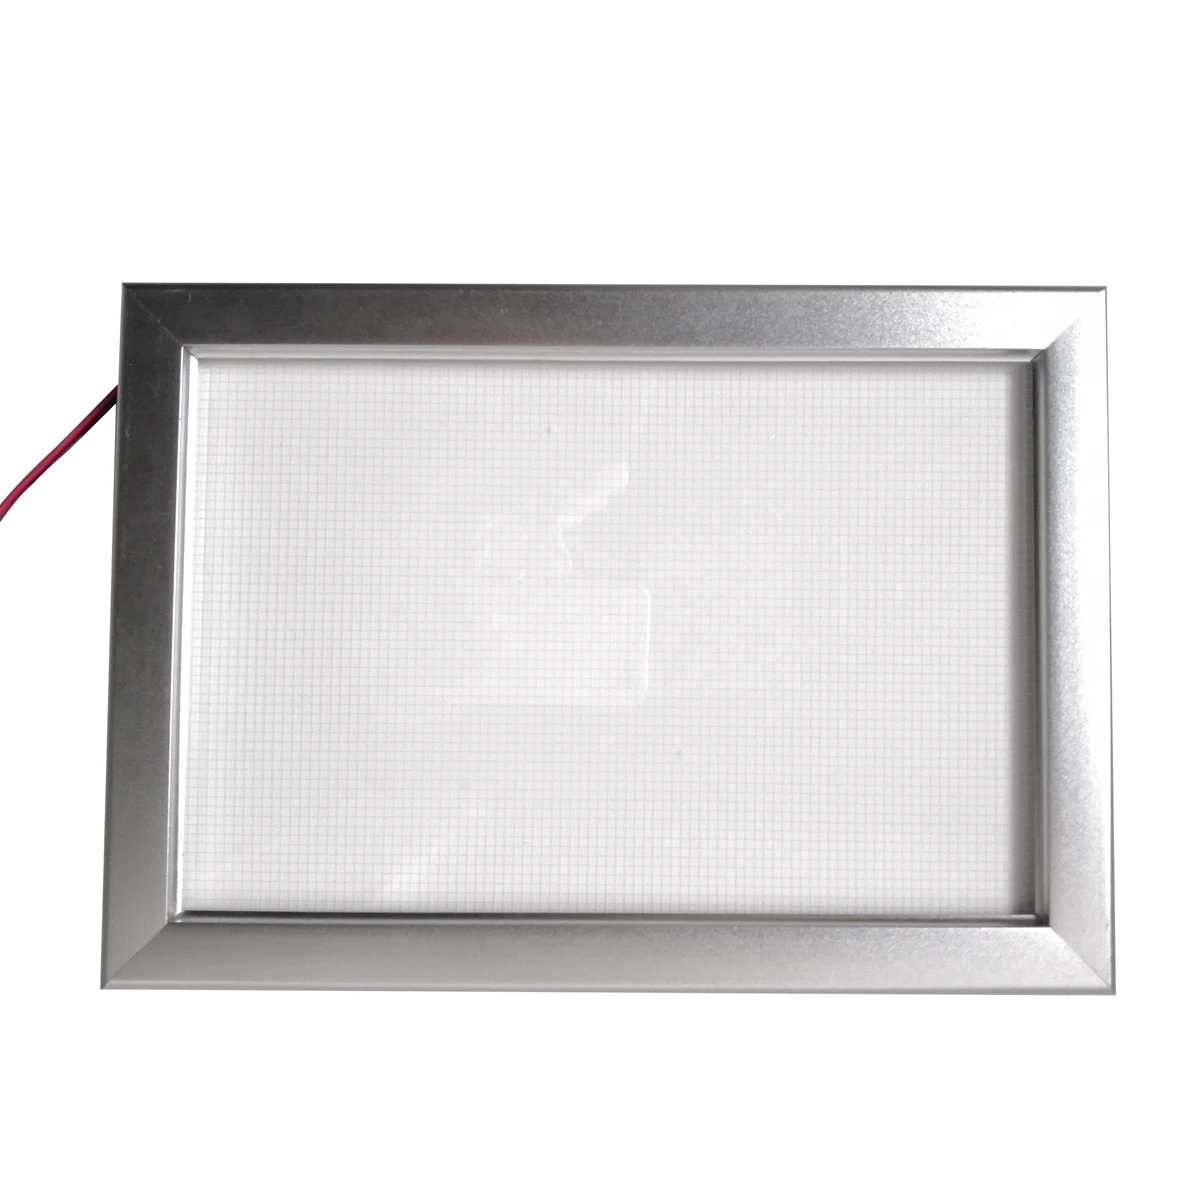 
aluminum snap frame outdoor thin led light box  (60830909180)